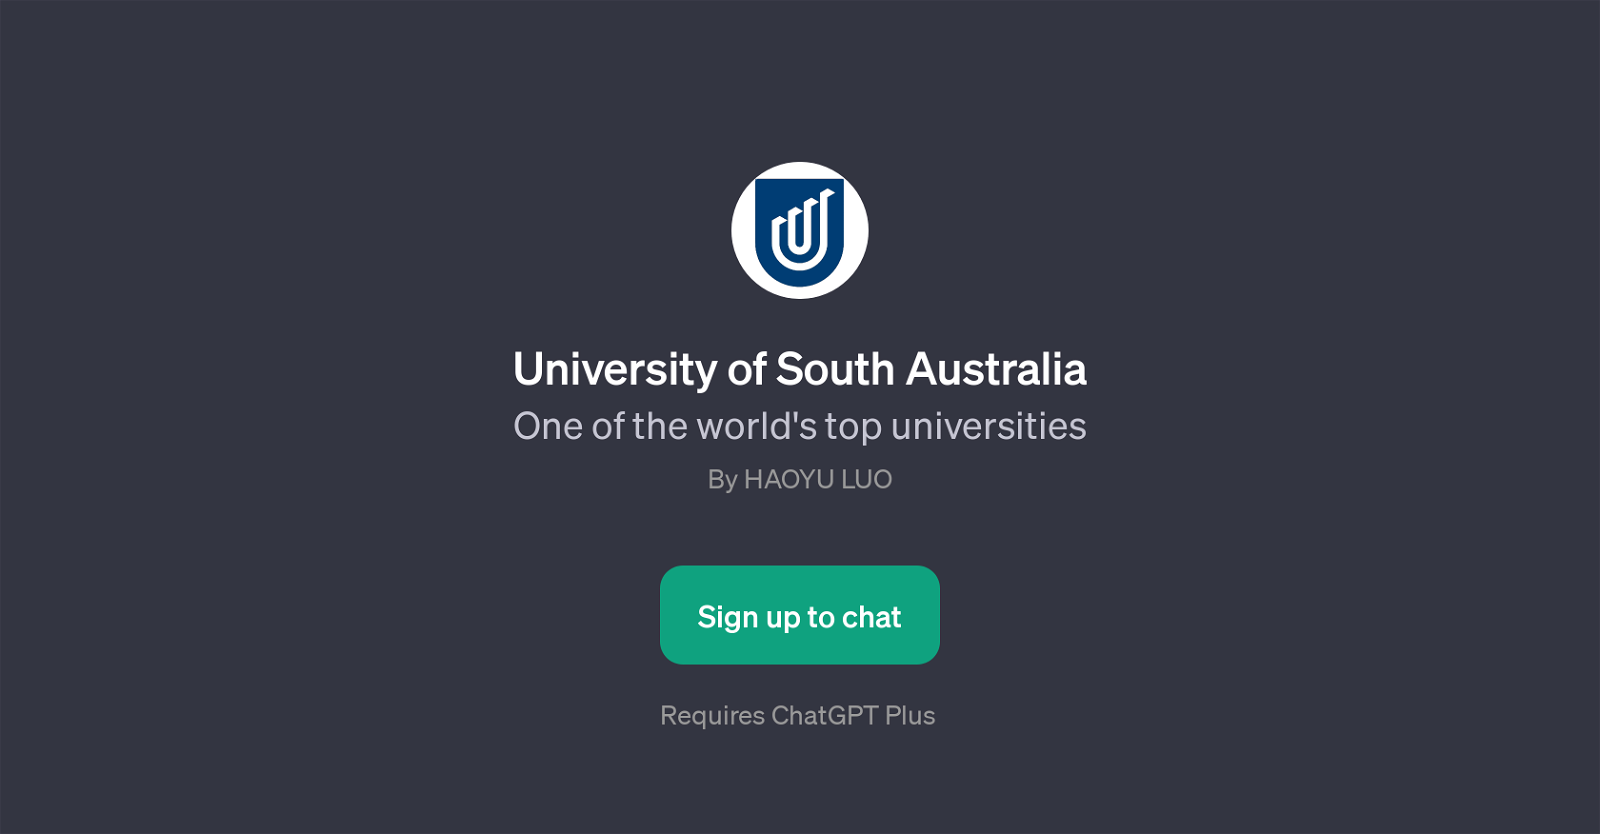 University of South Australia website